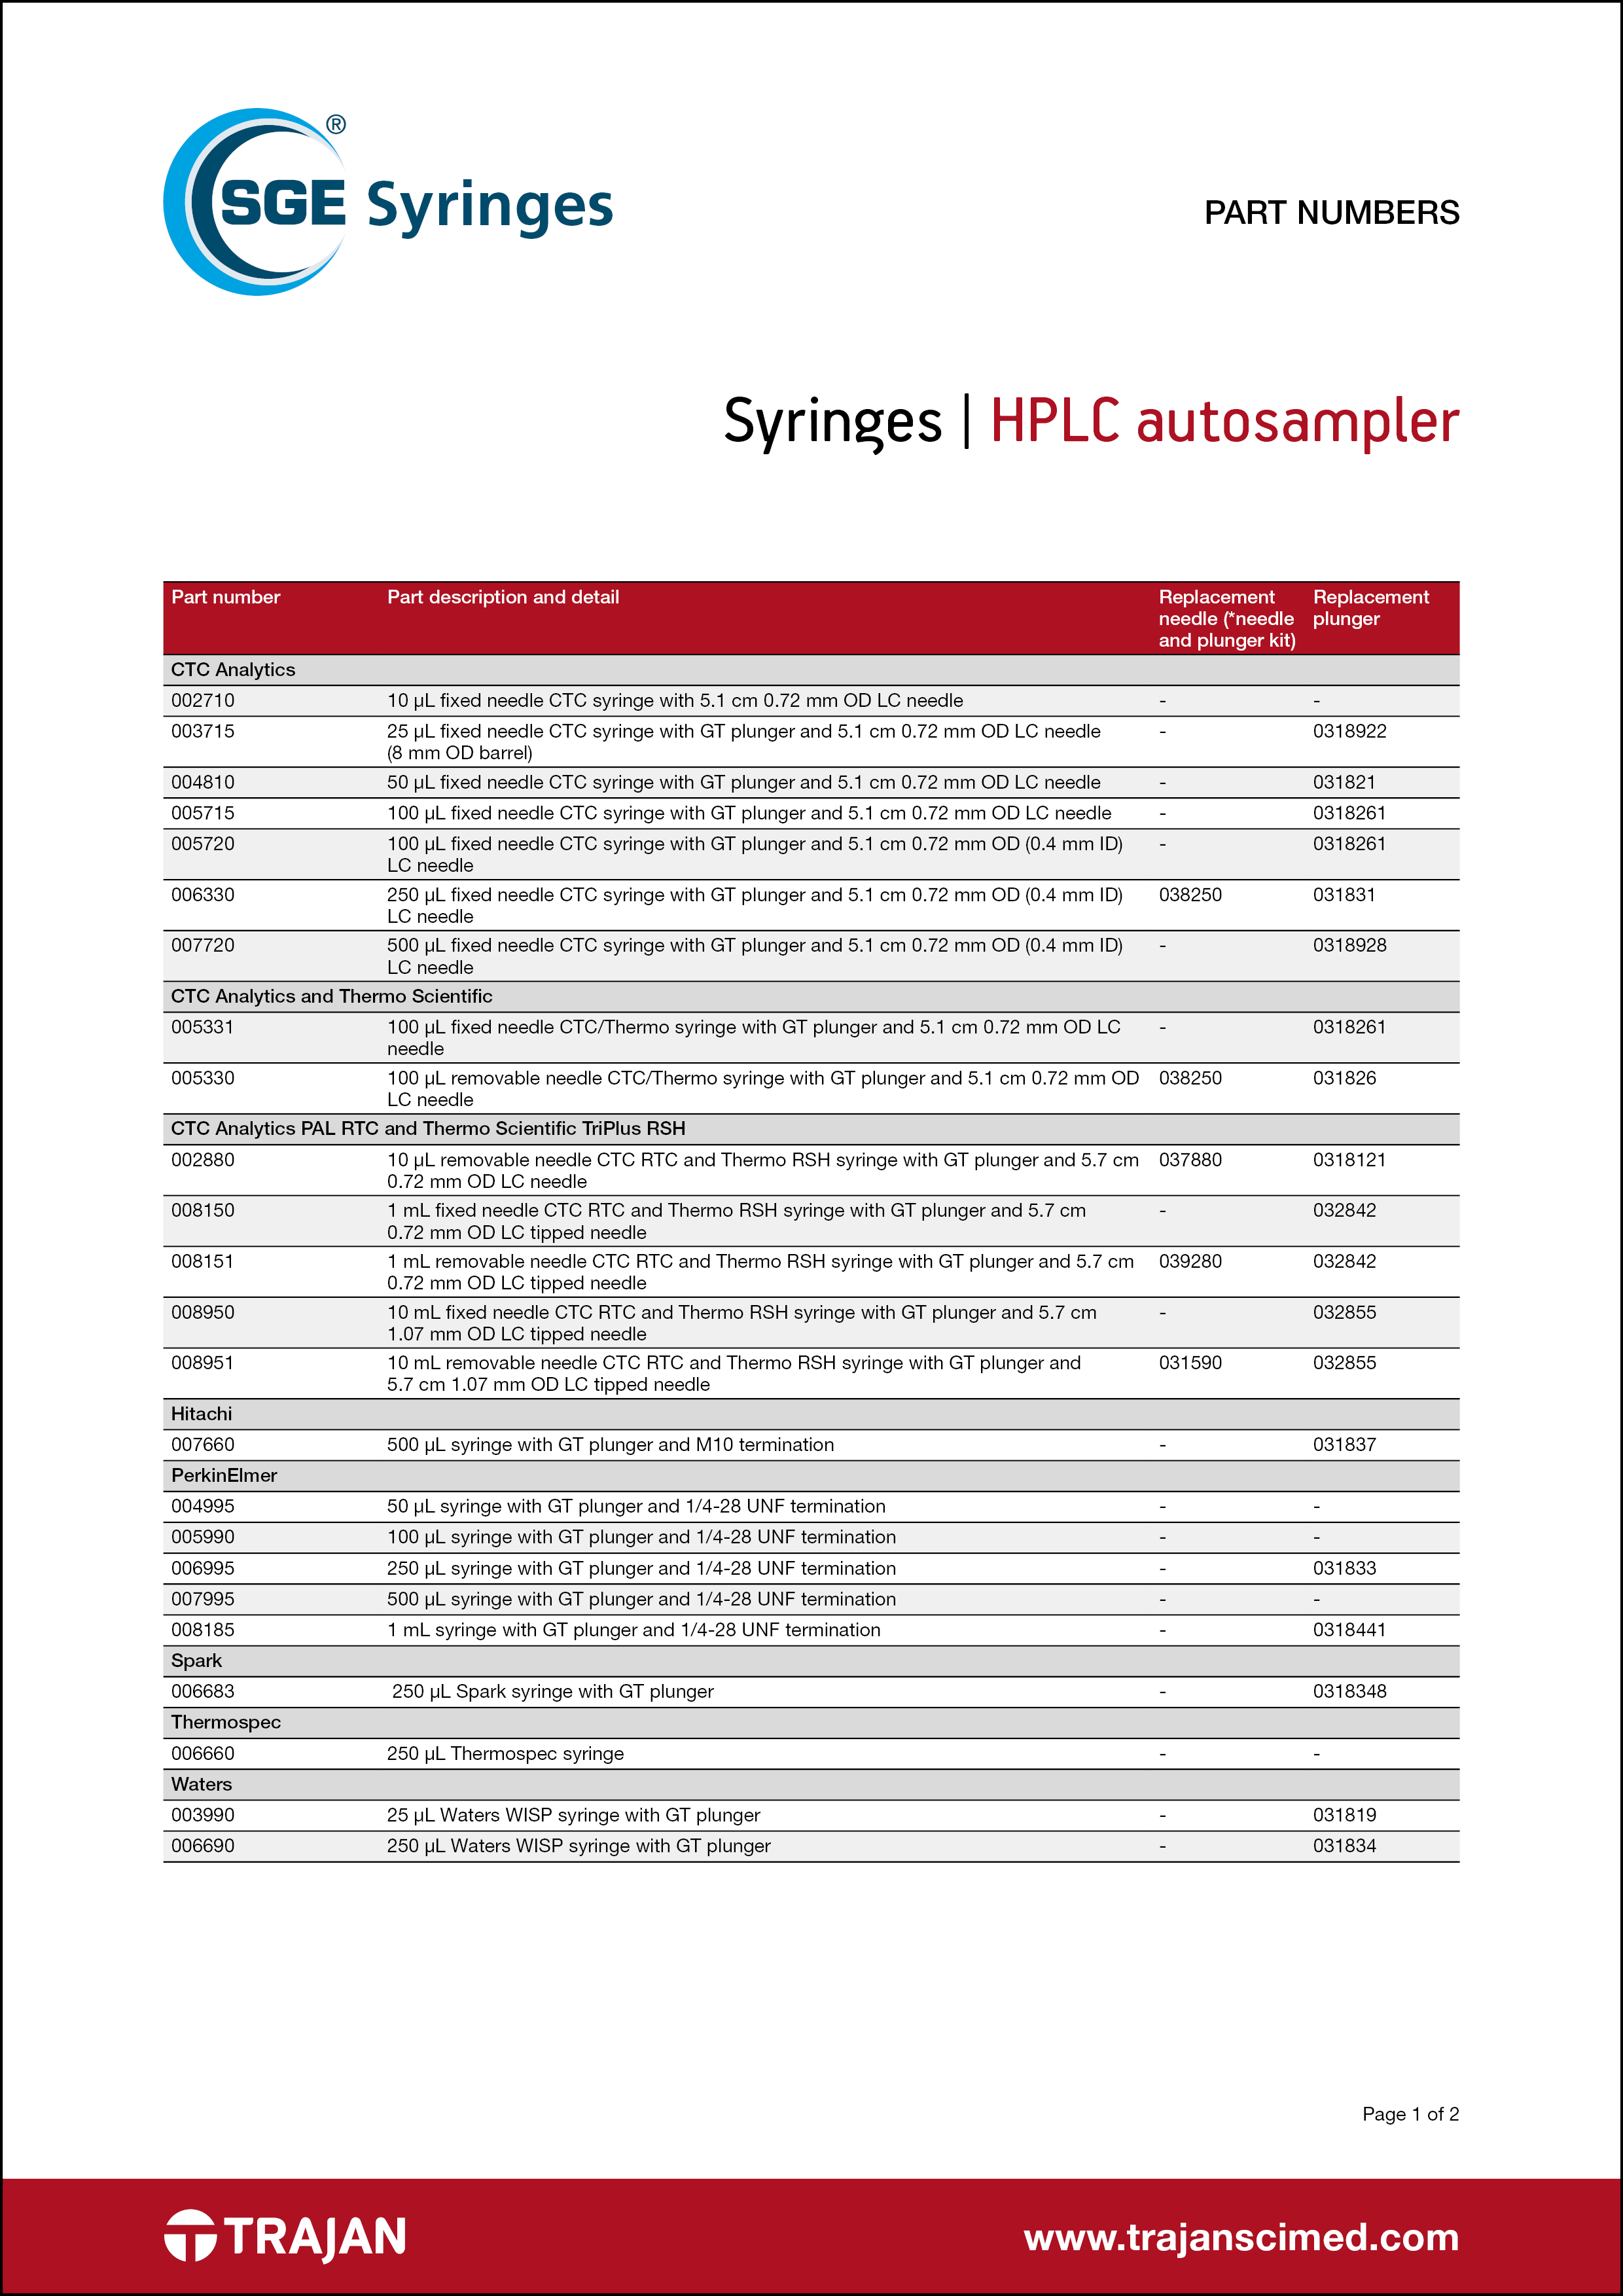 Part Number List - SGE LC autosampler syringes